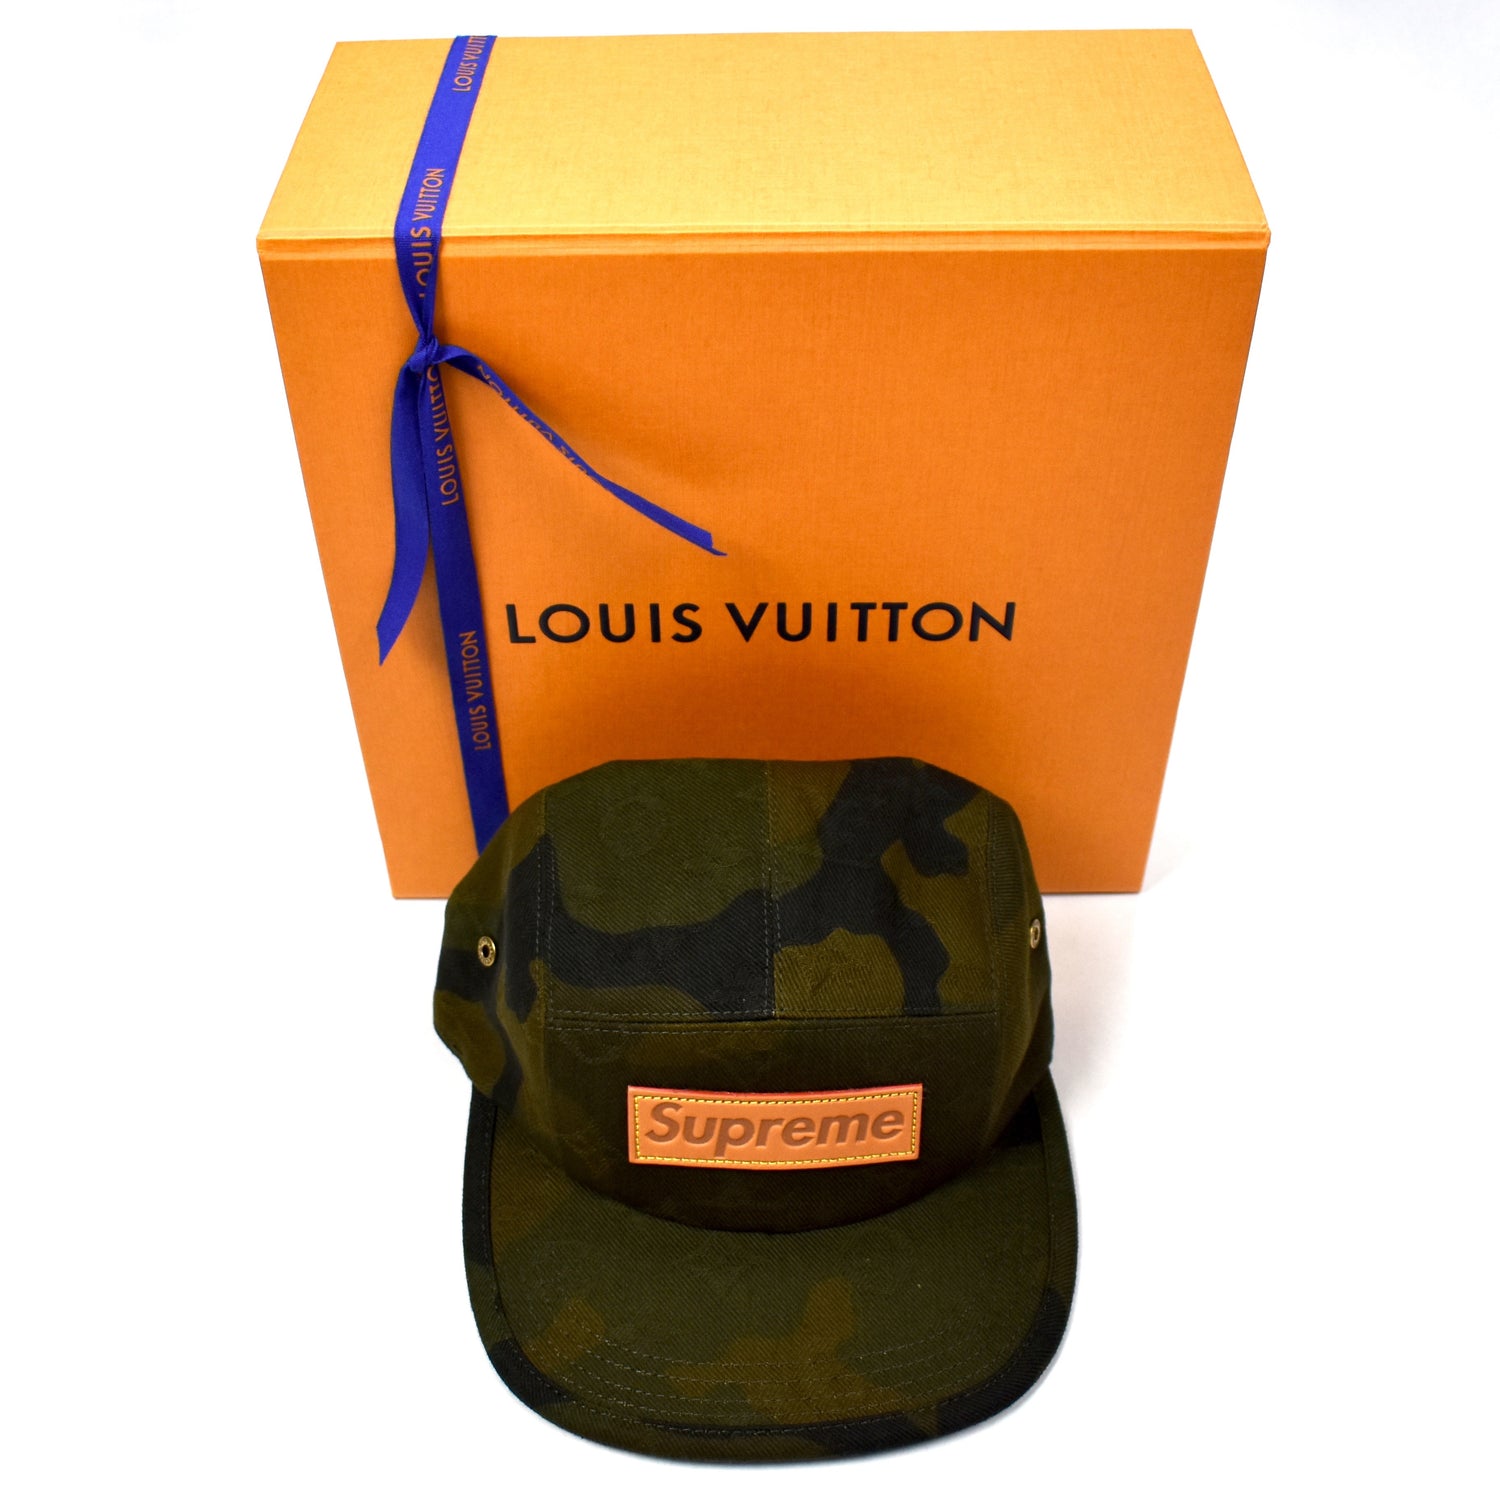 Louis Vuitton Supreme Cap